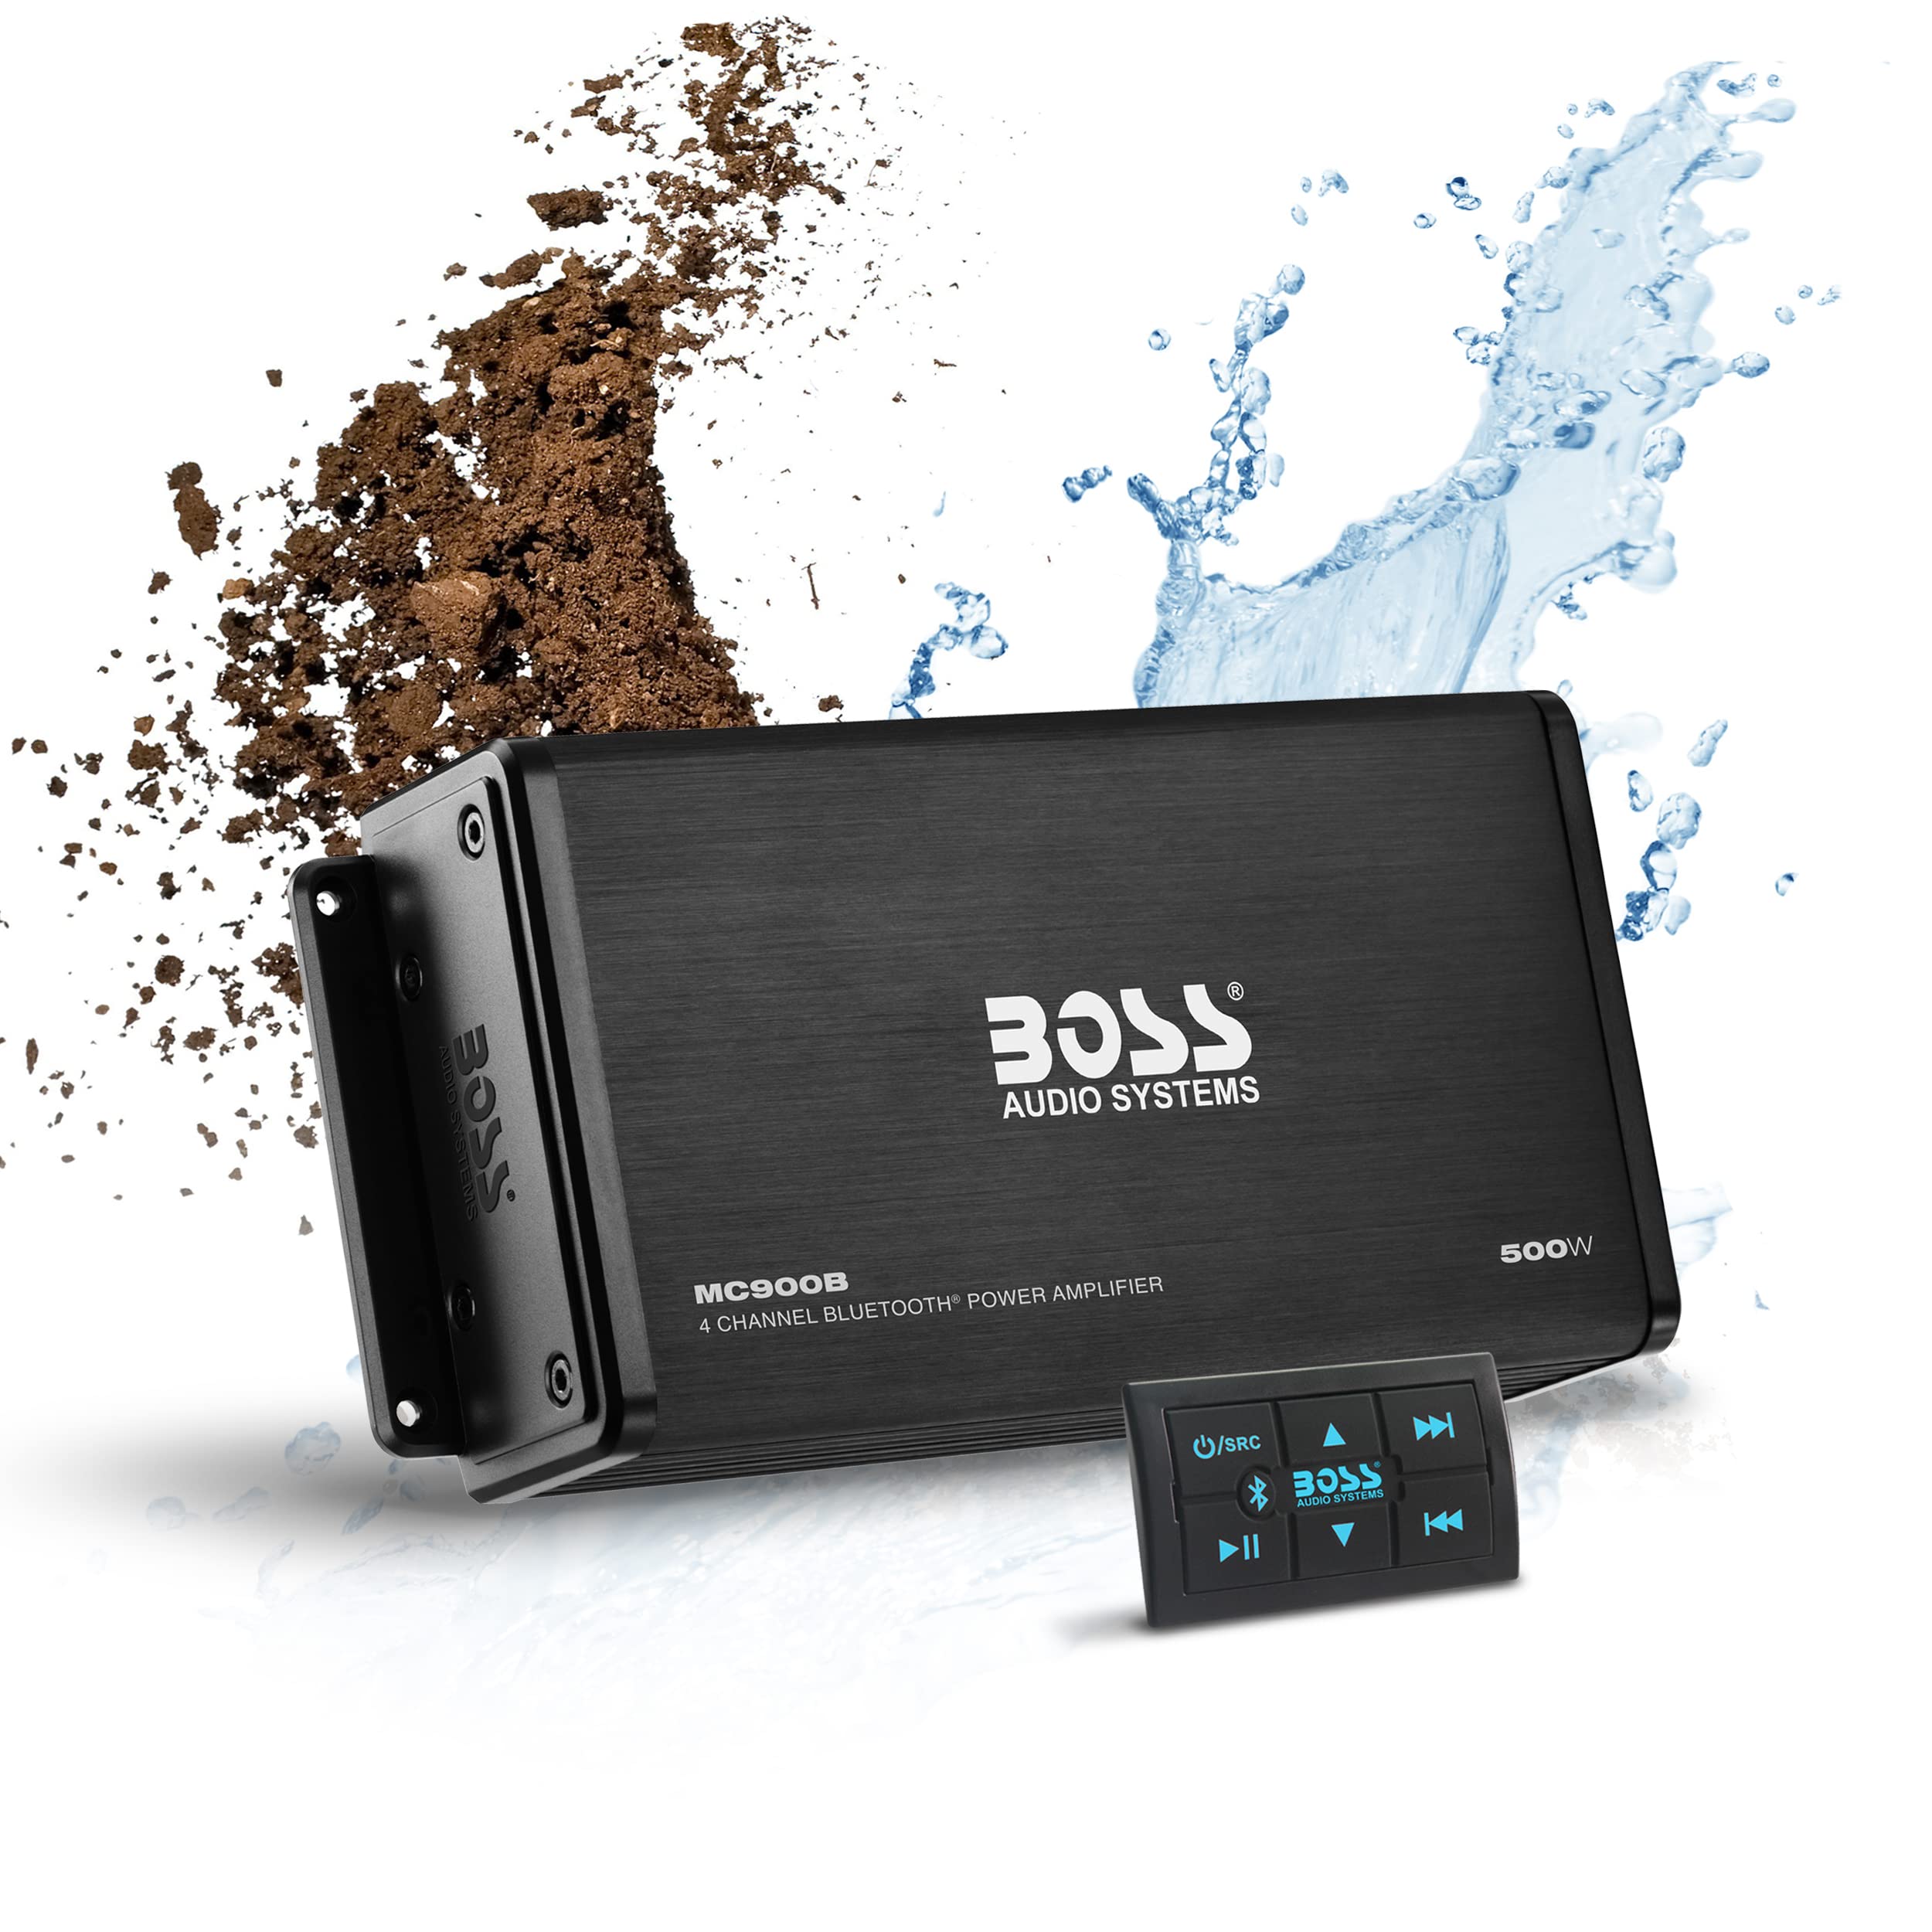 BOSS Audio Systems Systems MC900B Amplifier for ATV UTV...